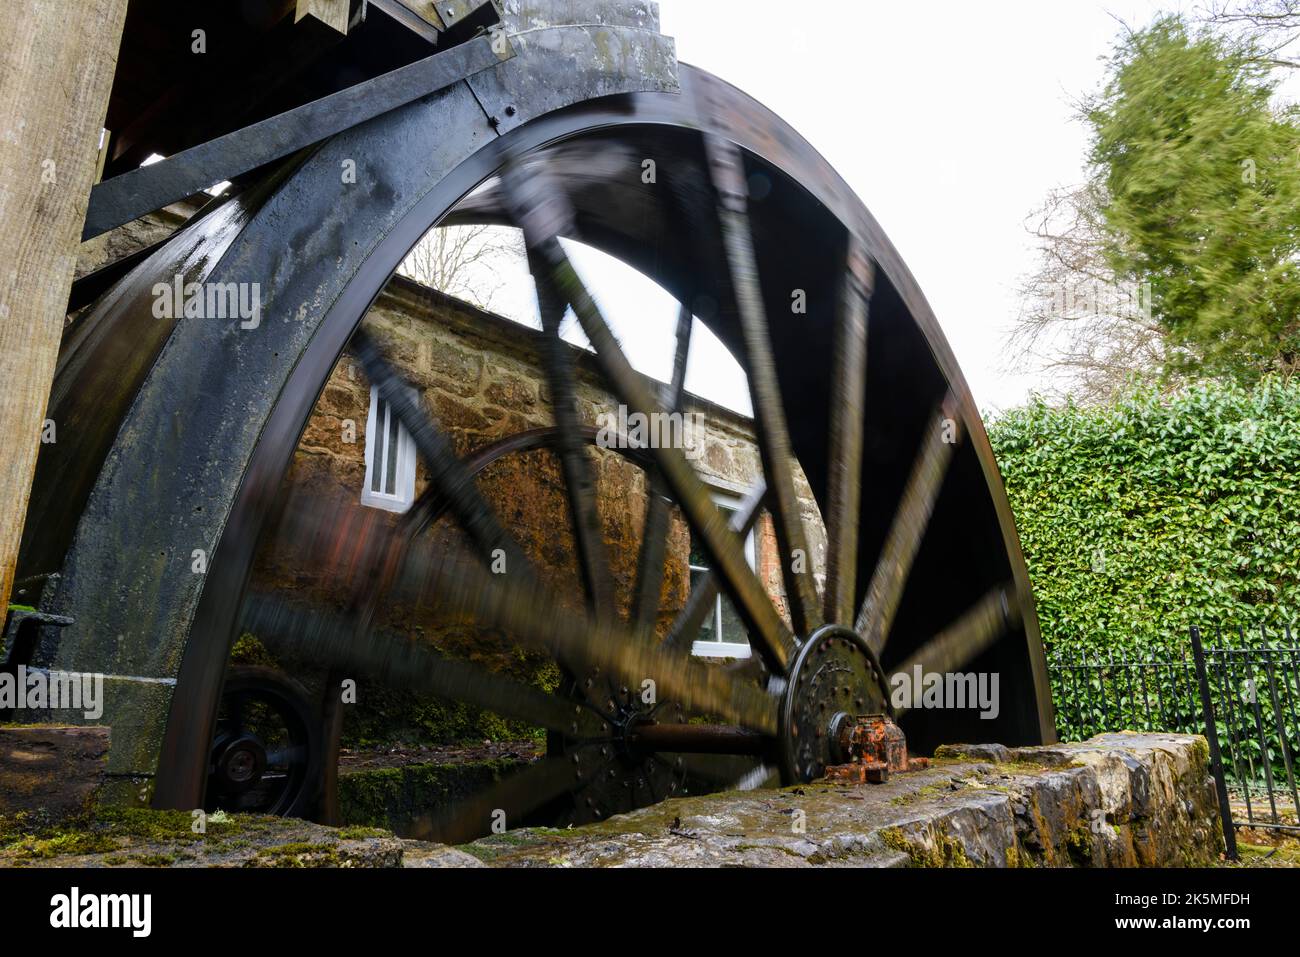 Spinning water wheel at an Irish mill Stock Photo